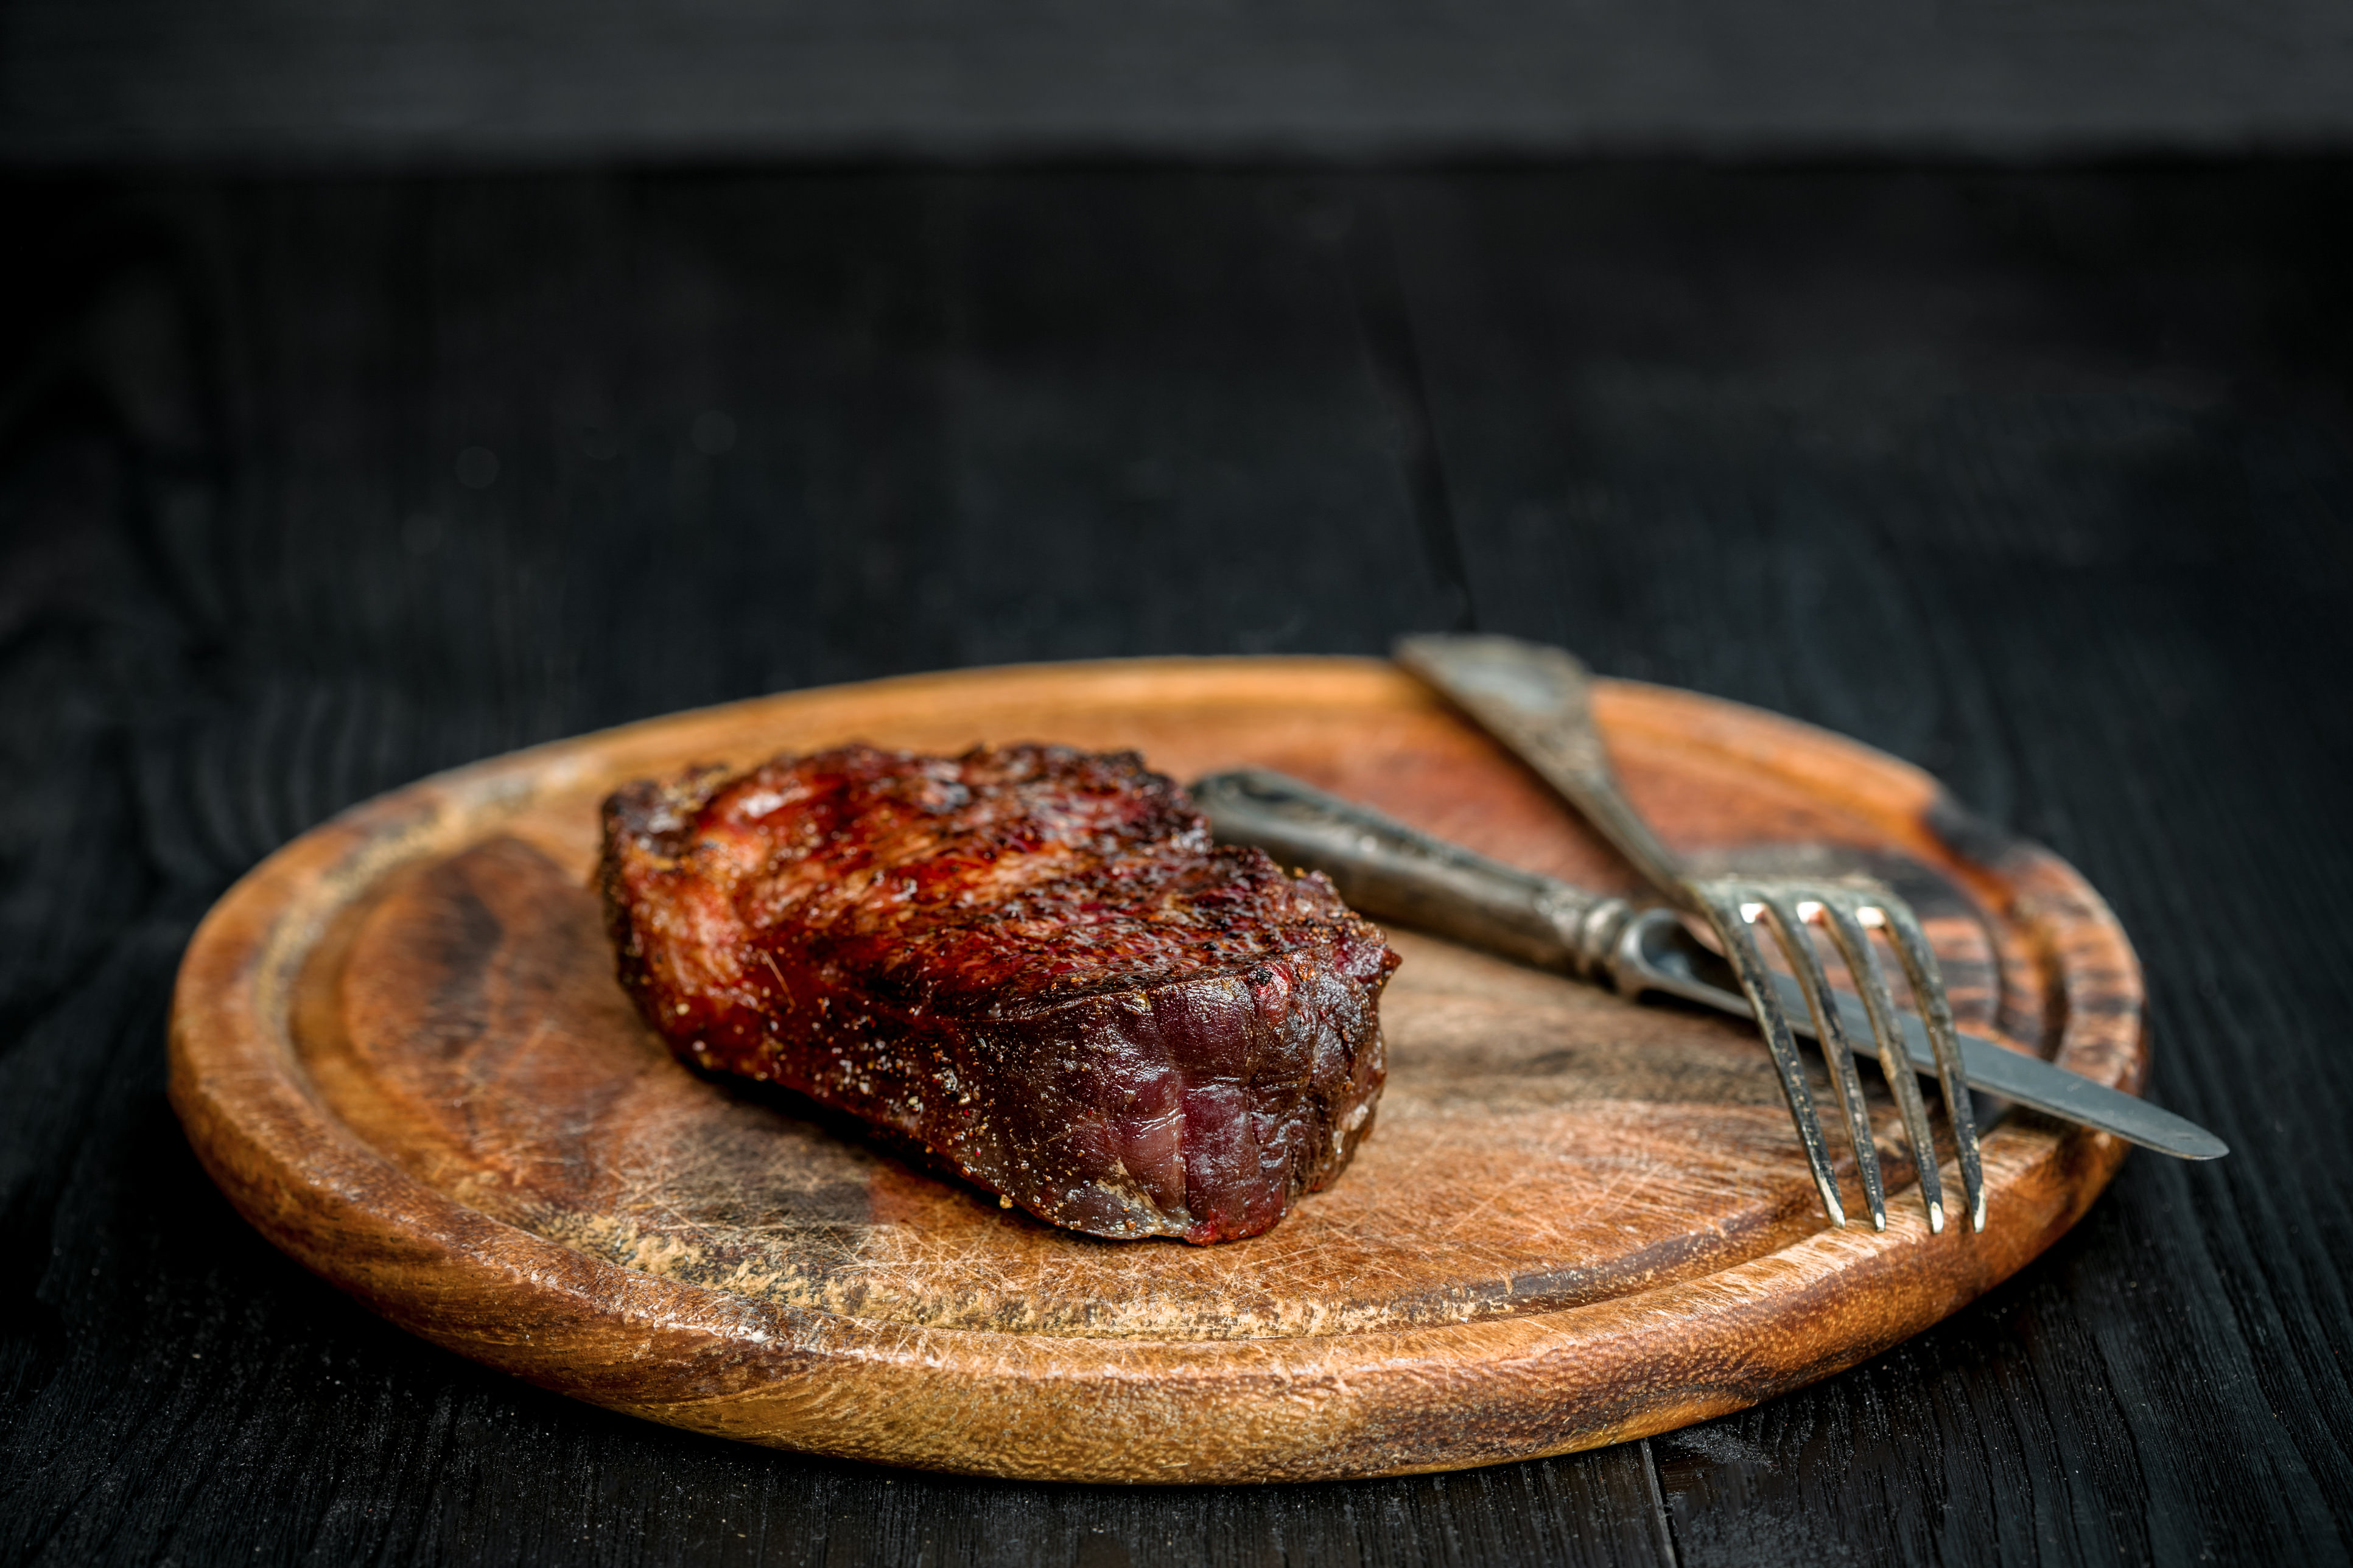 Detail Images Of Beef Steaks Nomer 45